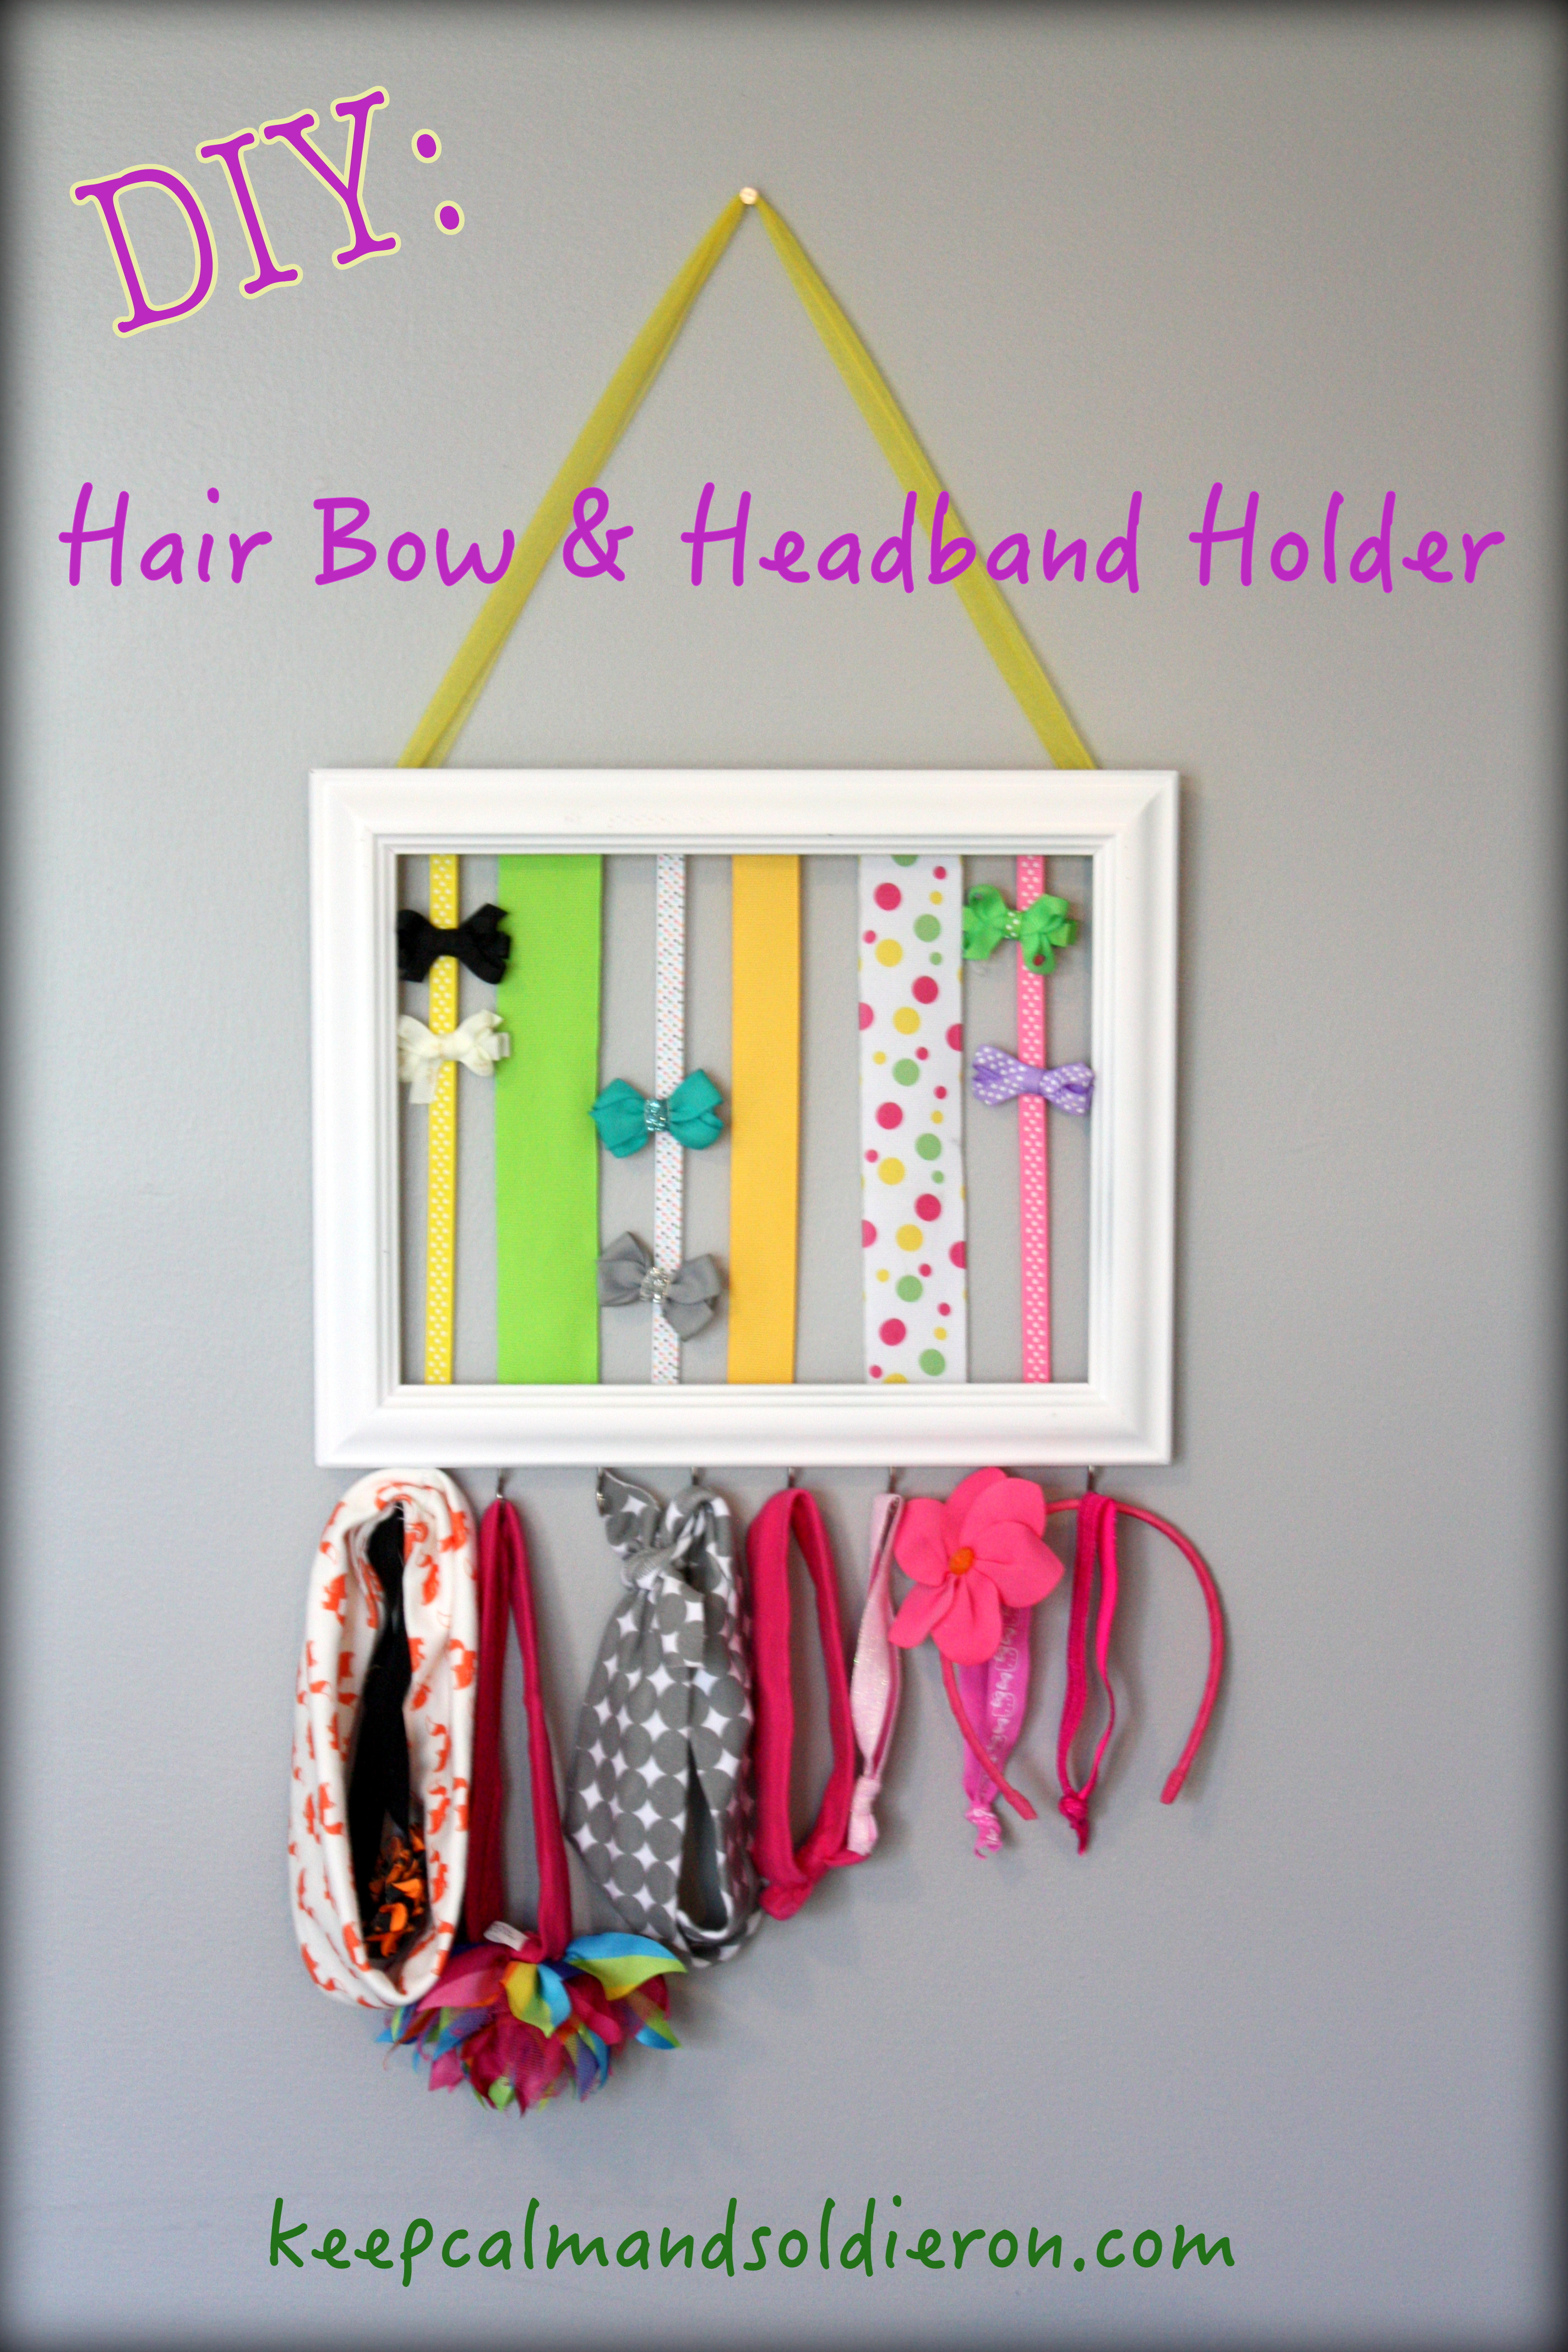 Best ideas about Hair Bow Organizer DIY
. Save or Pin DIY Hair Bow & Headband Holder Now.